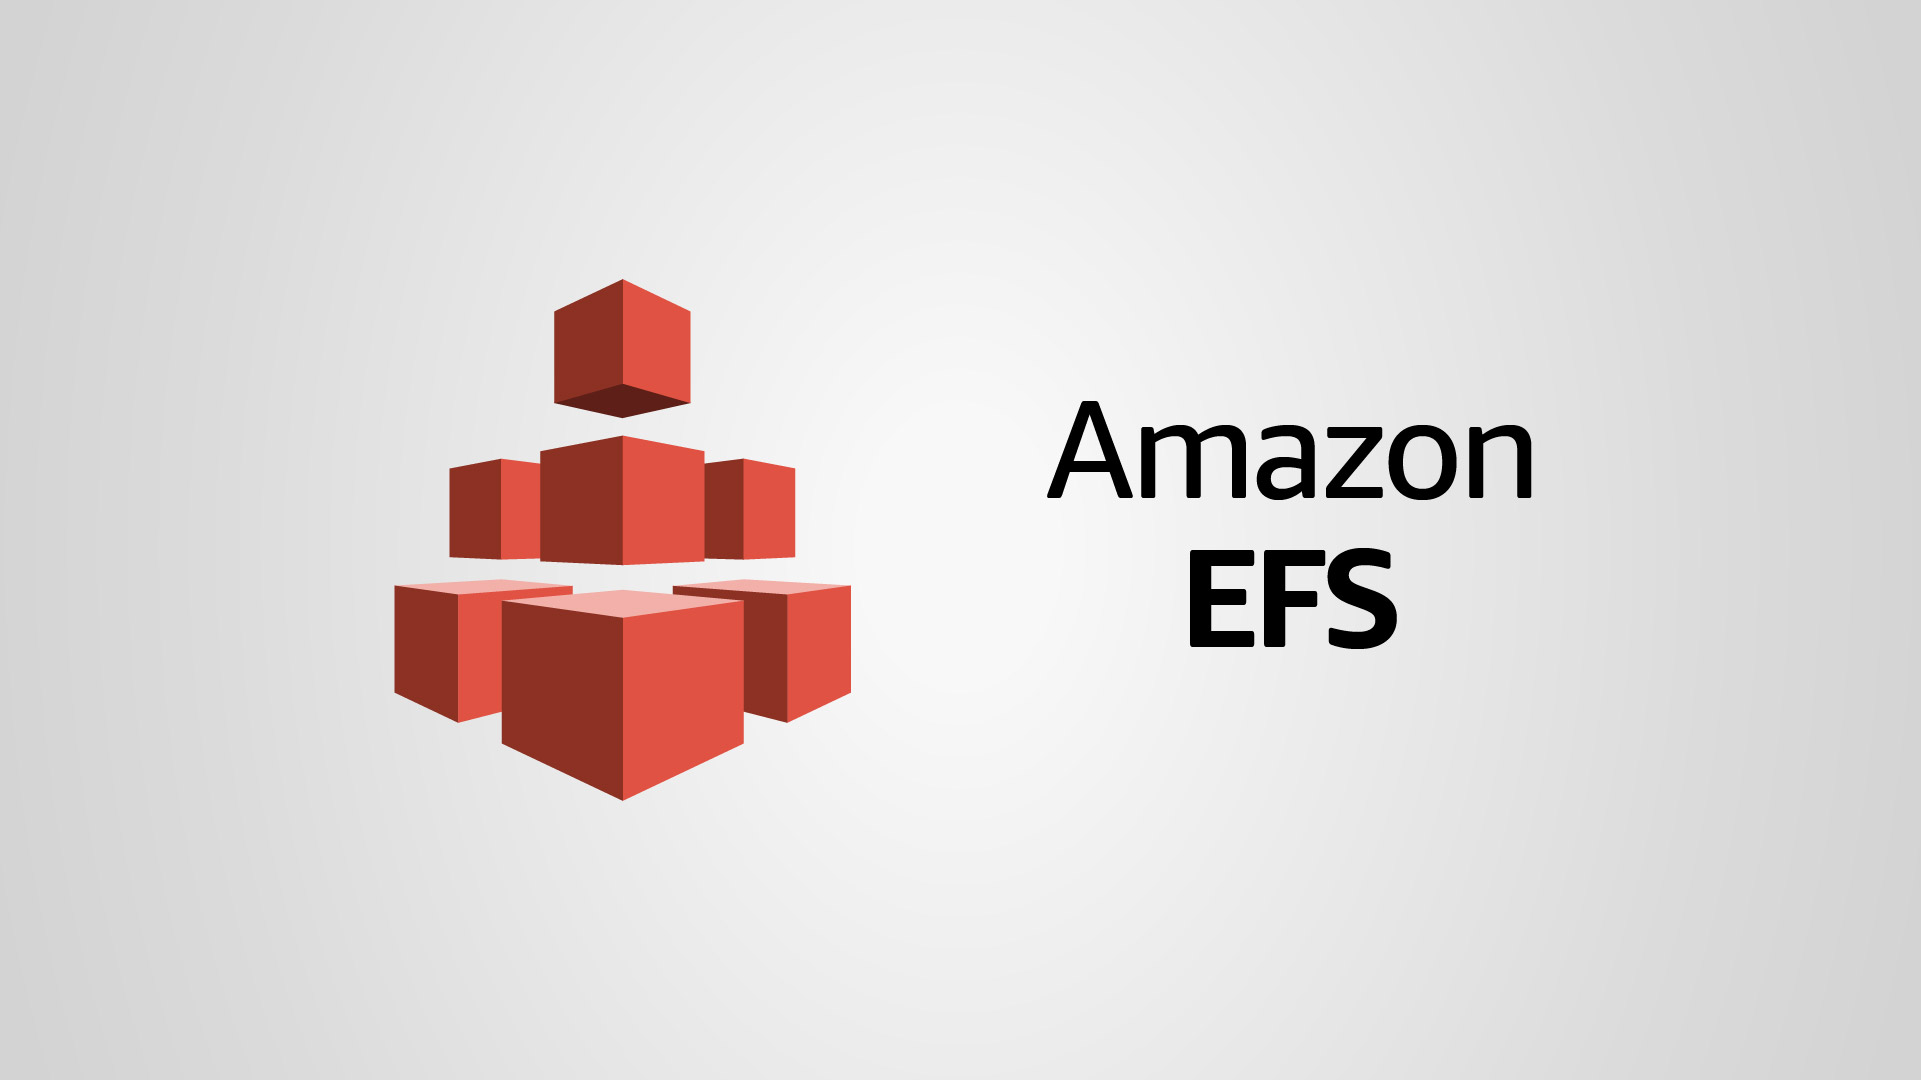 Amazon EFS